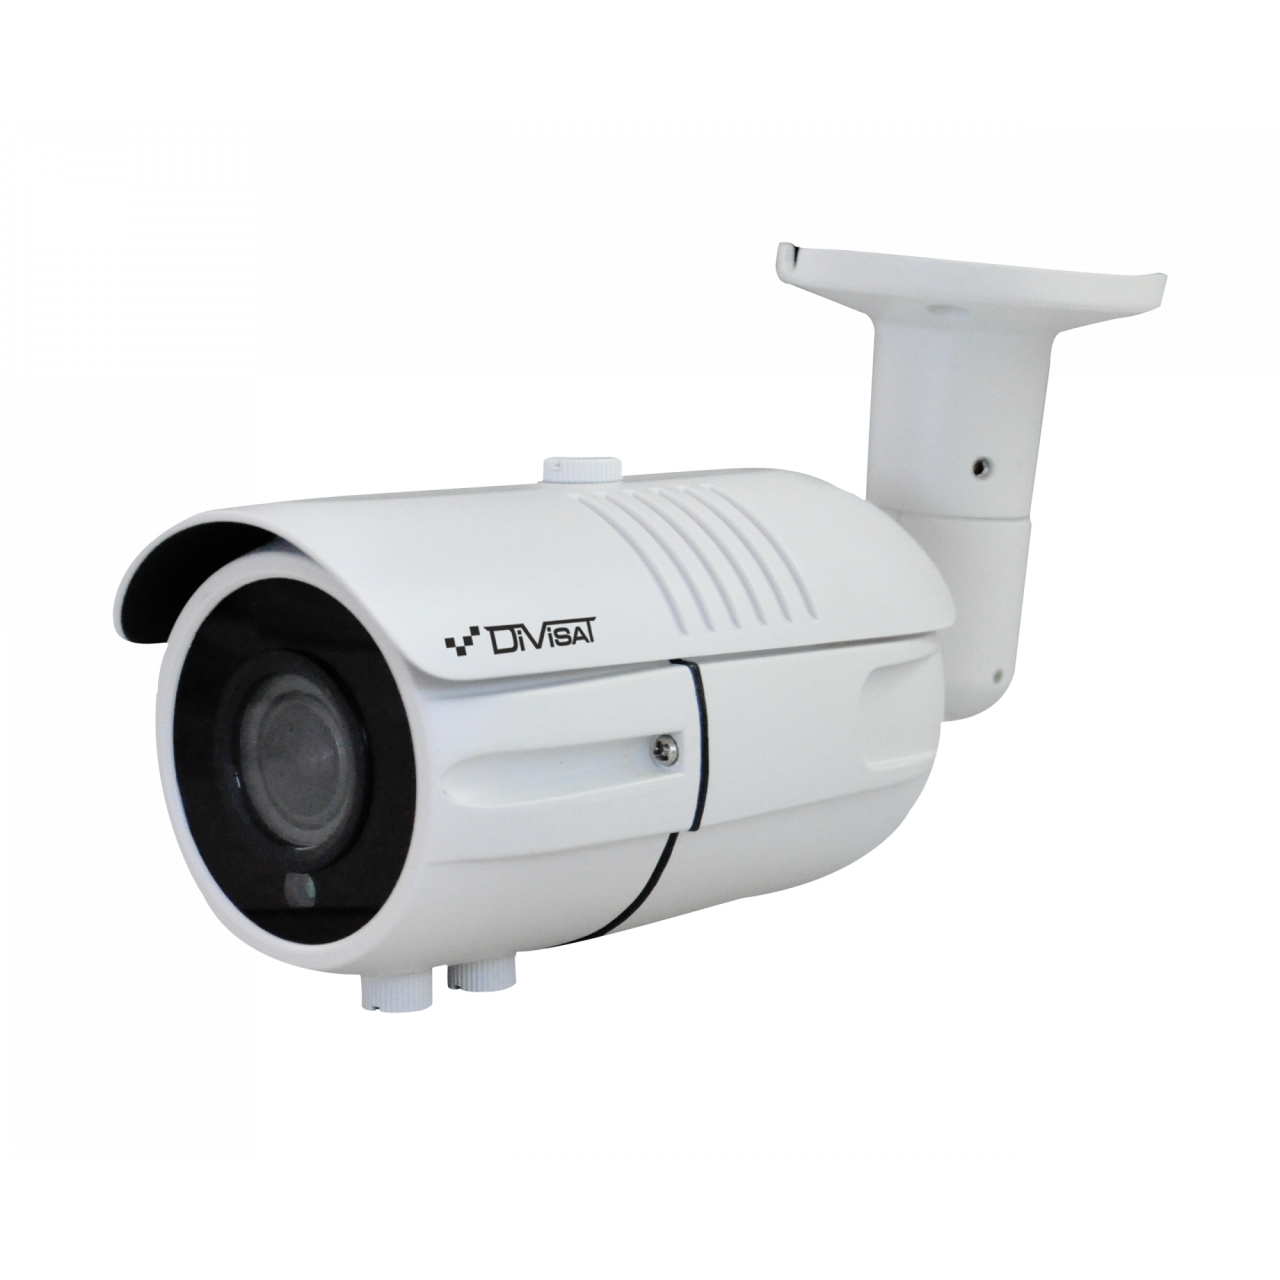 Уличная IP-видеокамера DVI-S325V LV